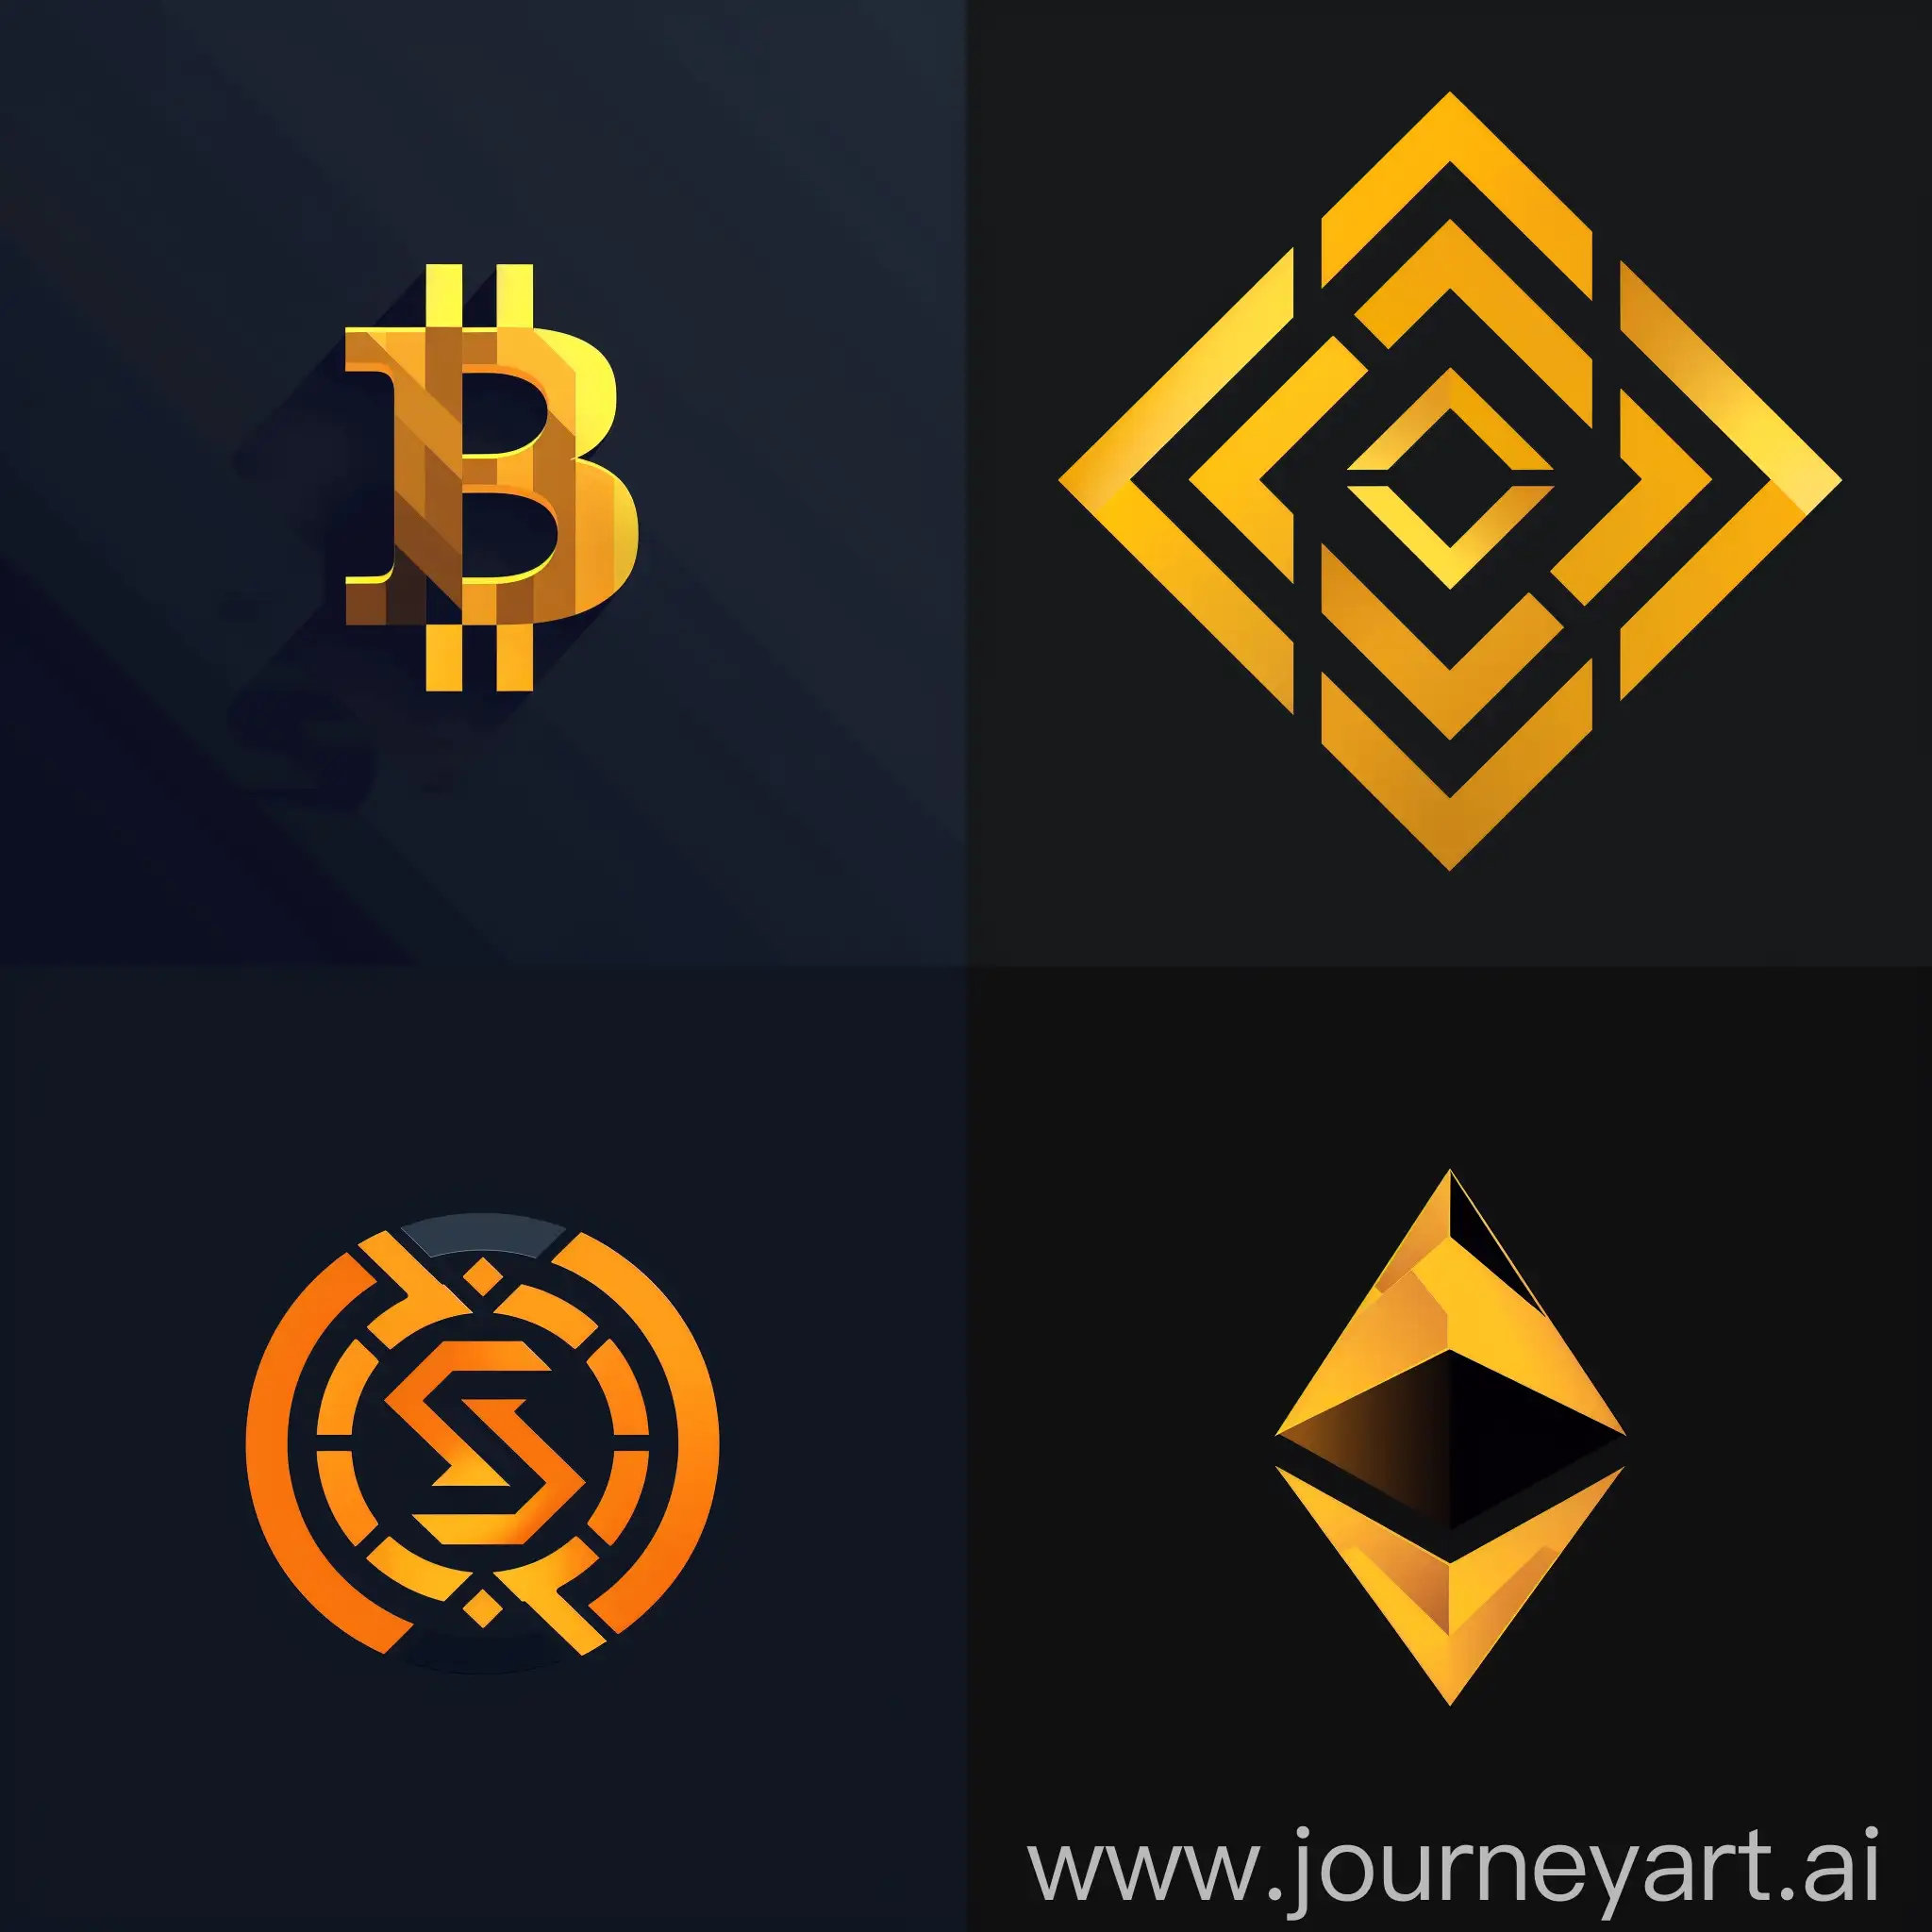 Modern-Crypto-YouTube-Channel-Logo-Design-with-Blockchain-Theme